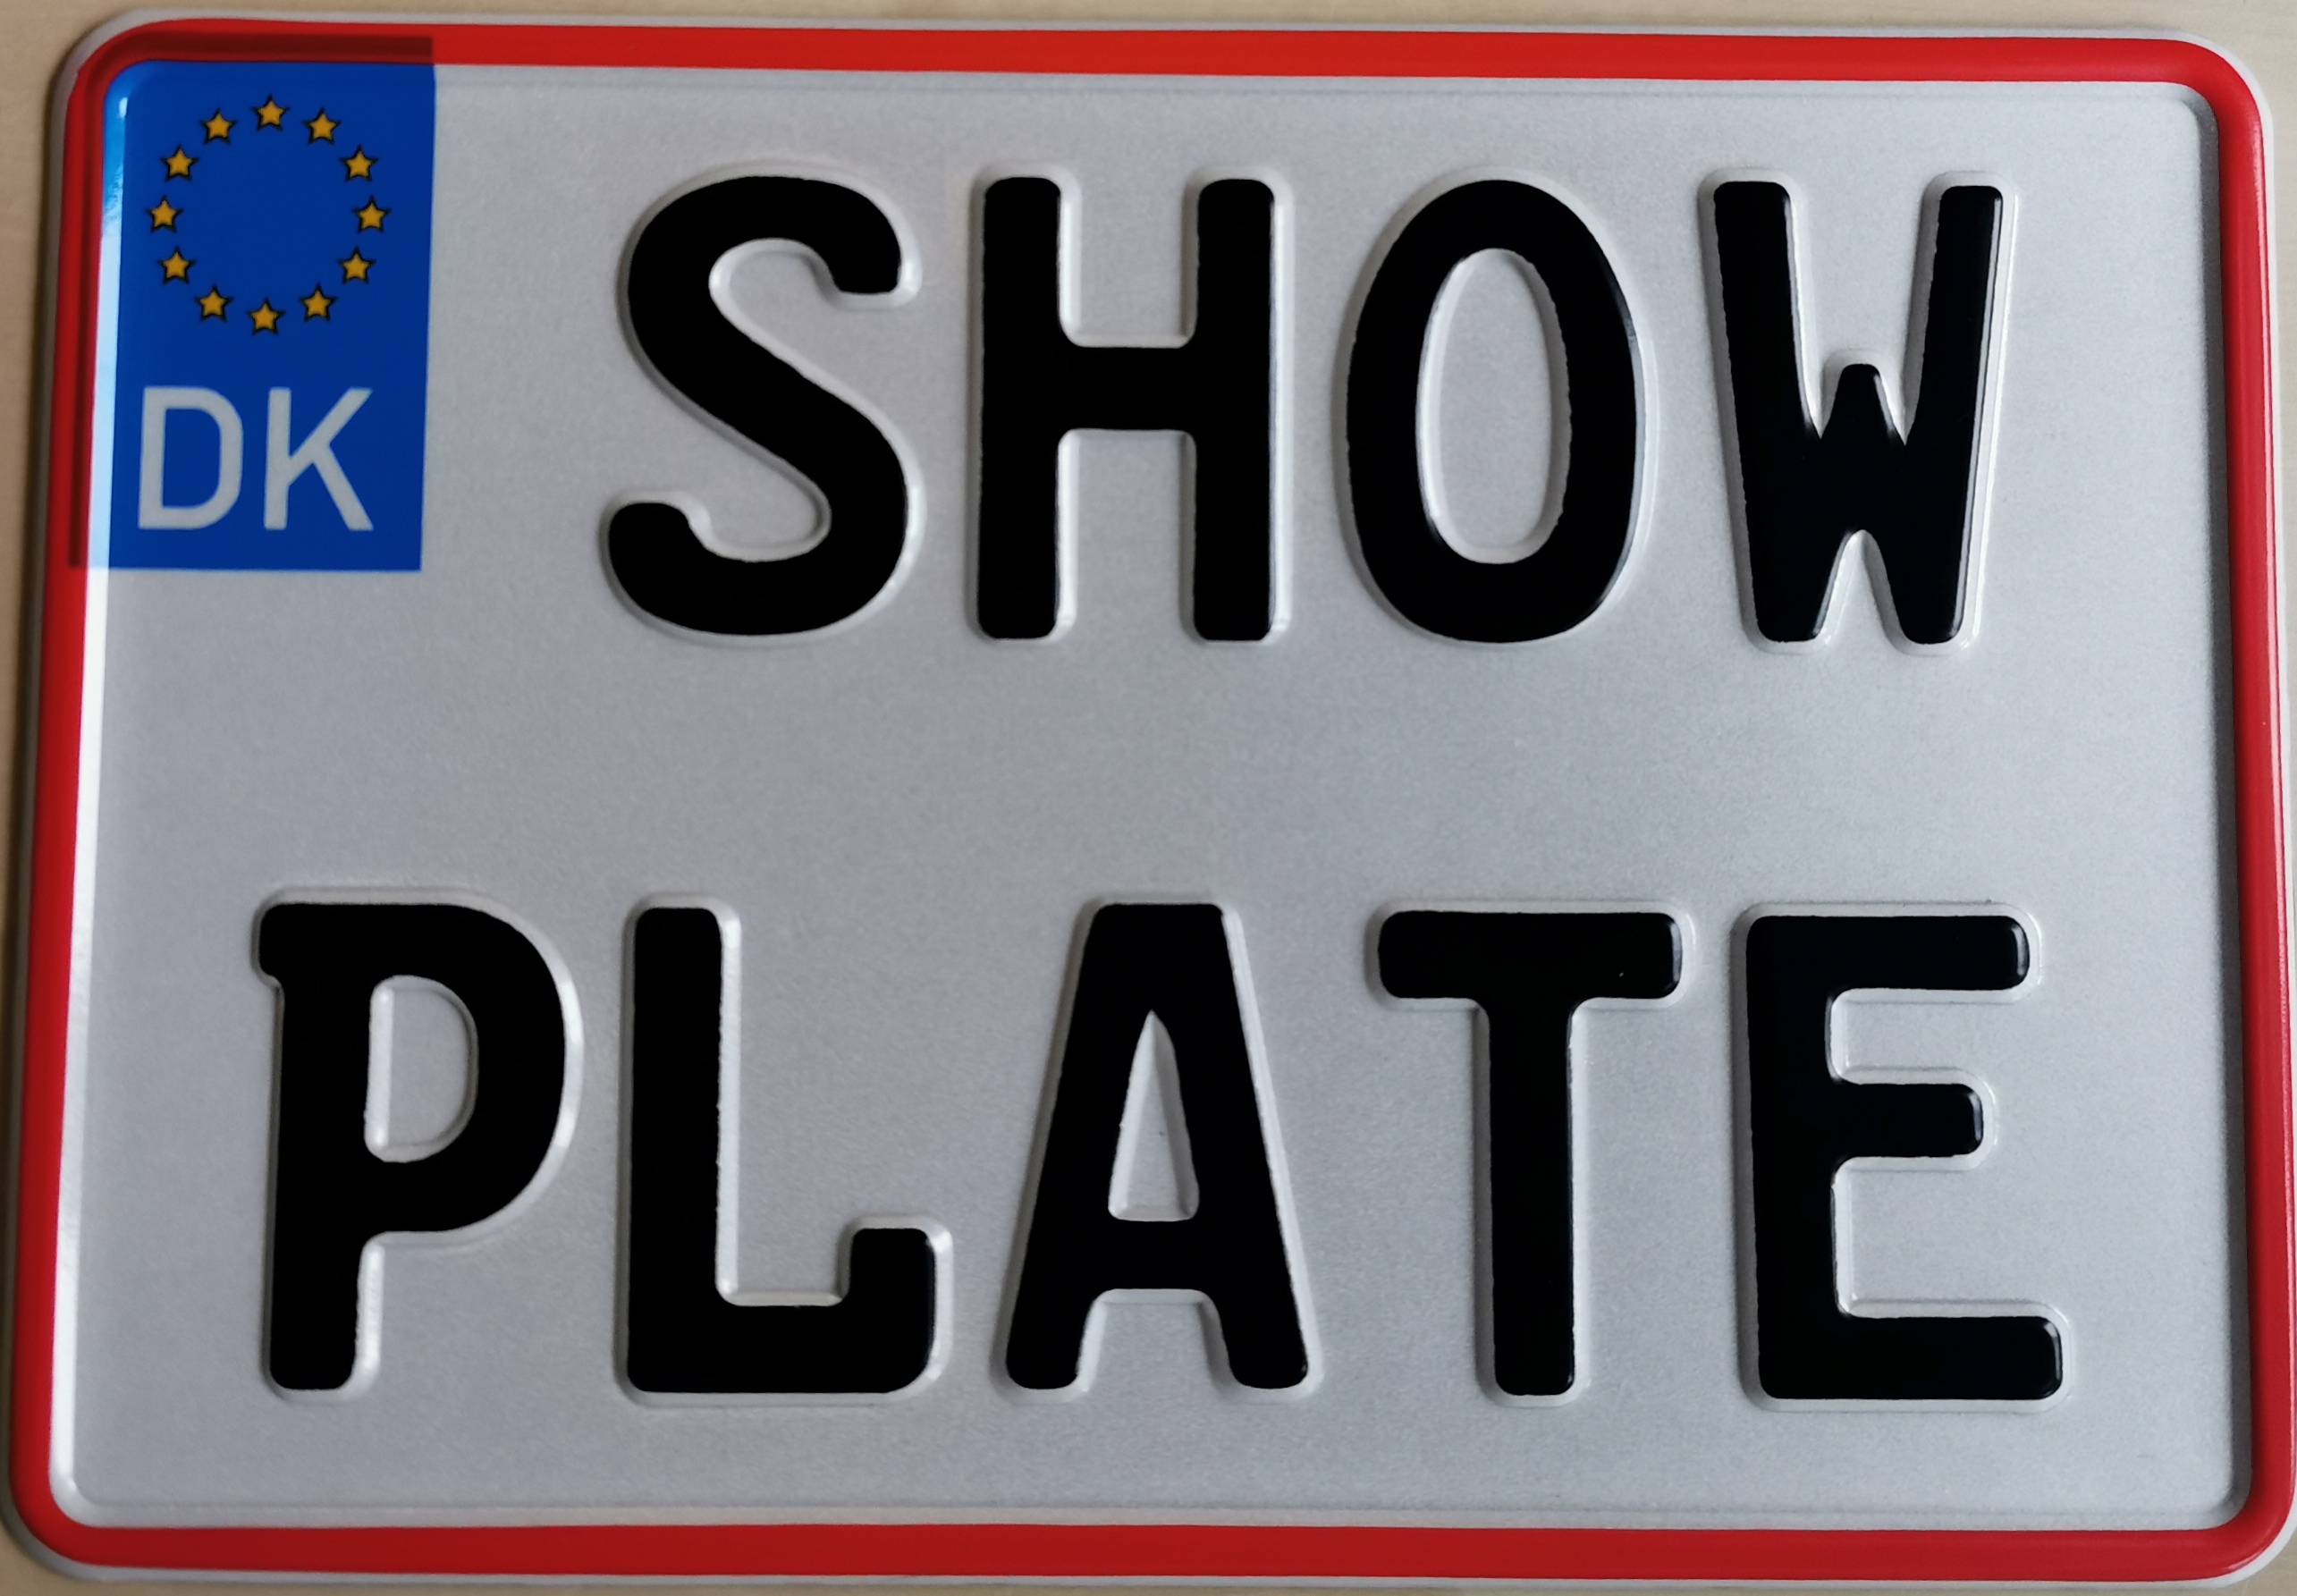 18c. Danish Showplate MC plate original size 240 x 165mm with EU